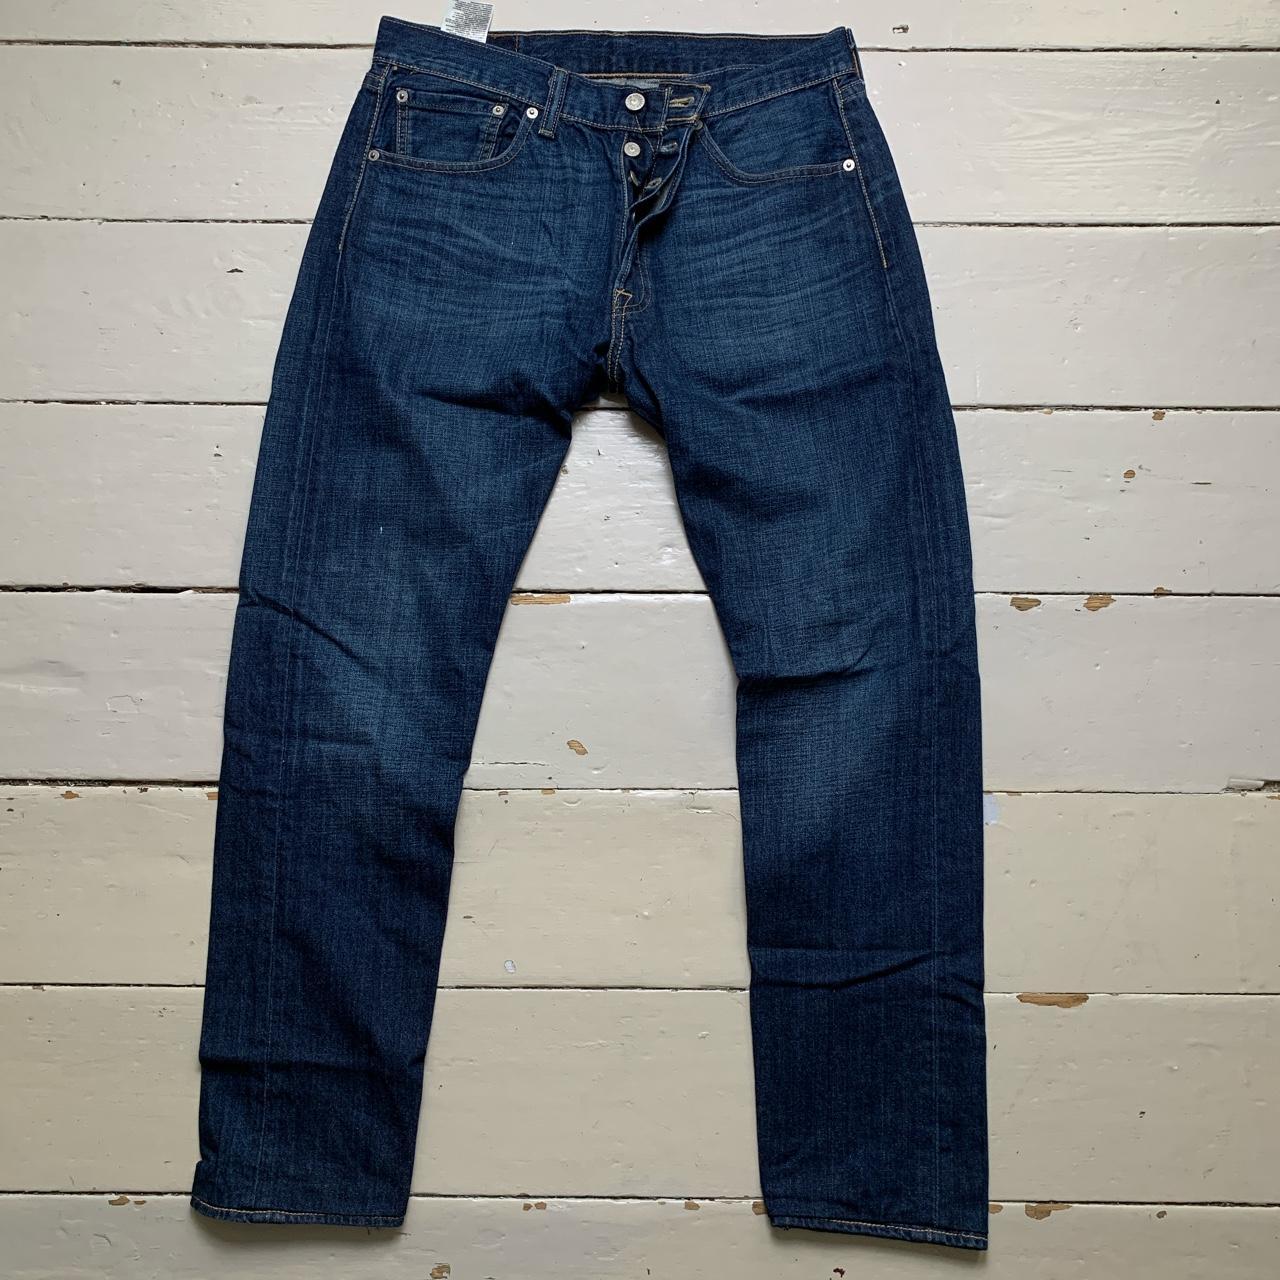 Levis 501 Navy Jeans